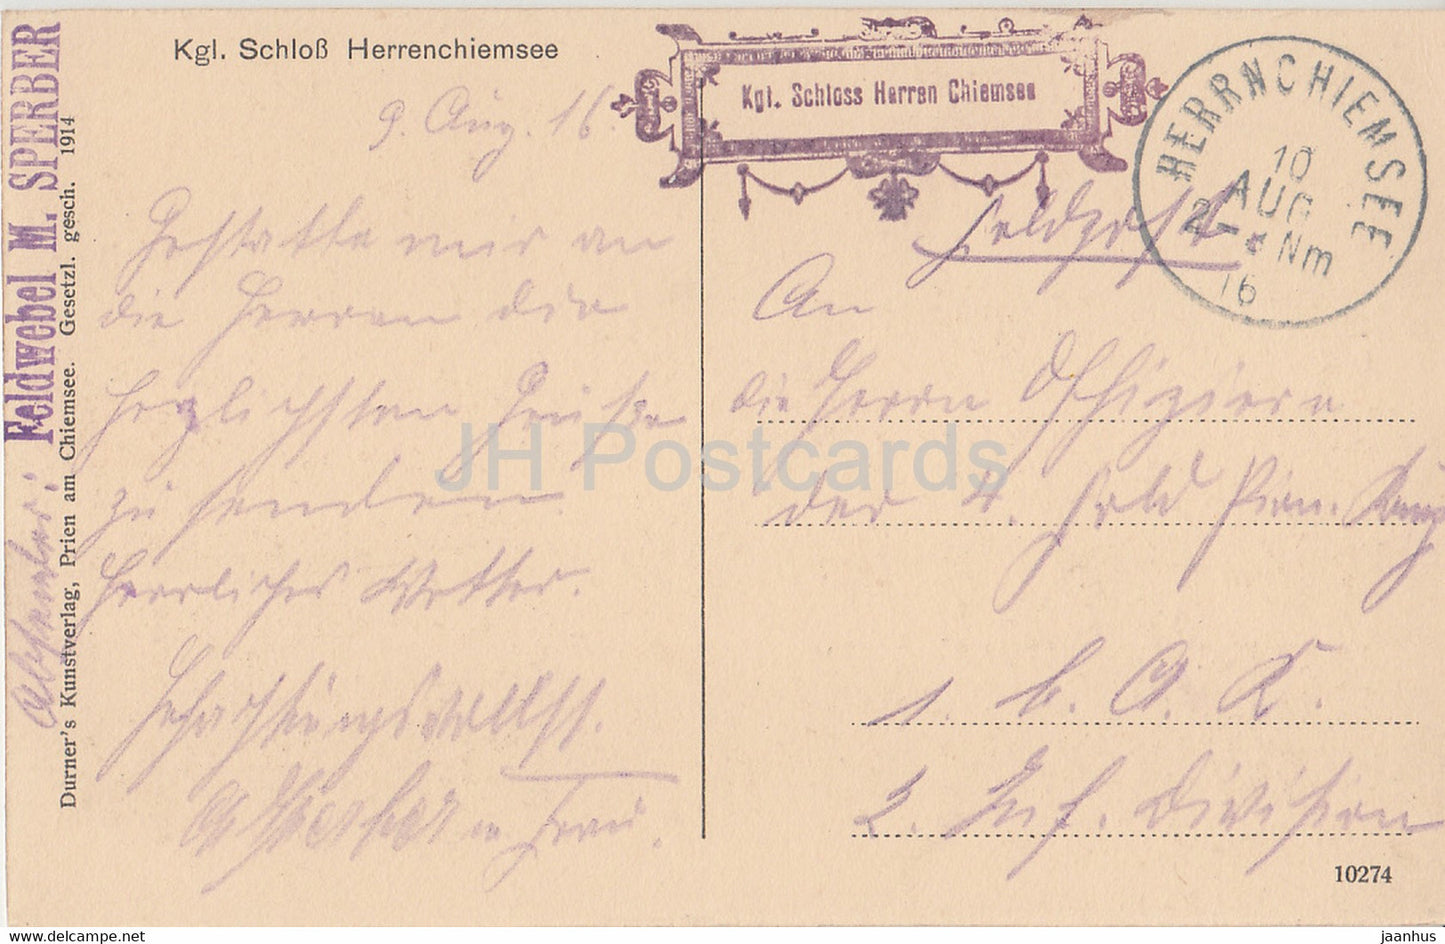 Kgl Schloss Herrenchiemsee - Feldpost - Feldwebel M. Sperber - 10274 - alte Postkarte - 1916 - Deutschland - gebraucht